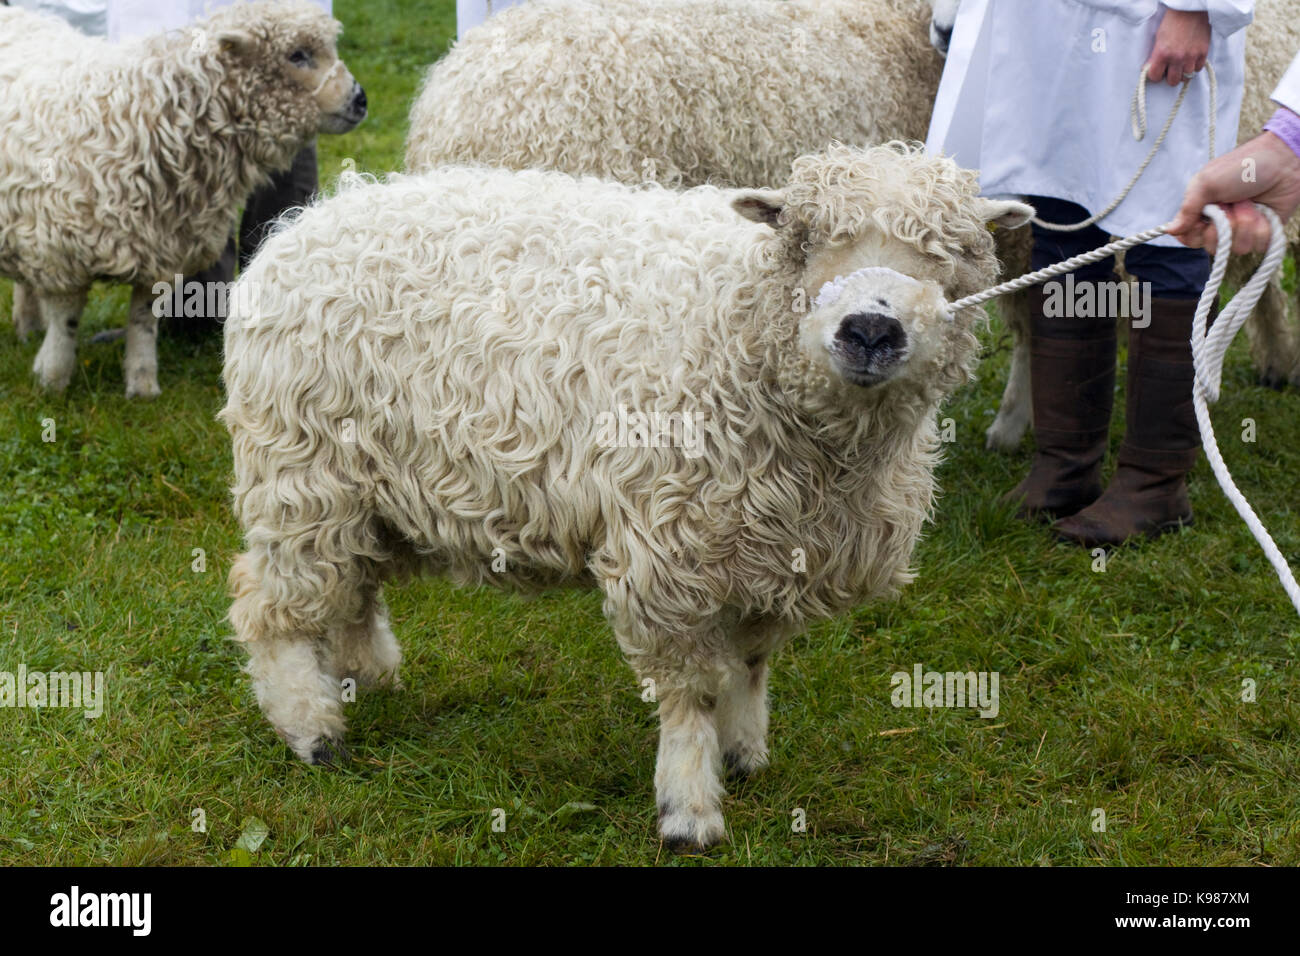 Grayfaced moutons Dartmoor dans un ring d'exposition Banque D'Images